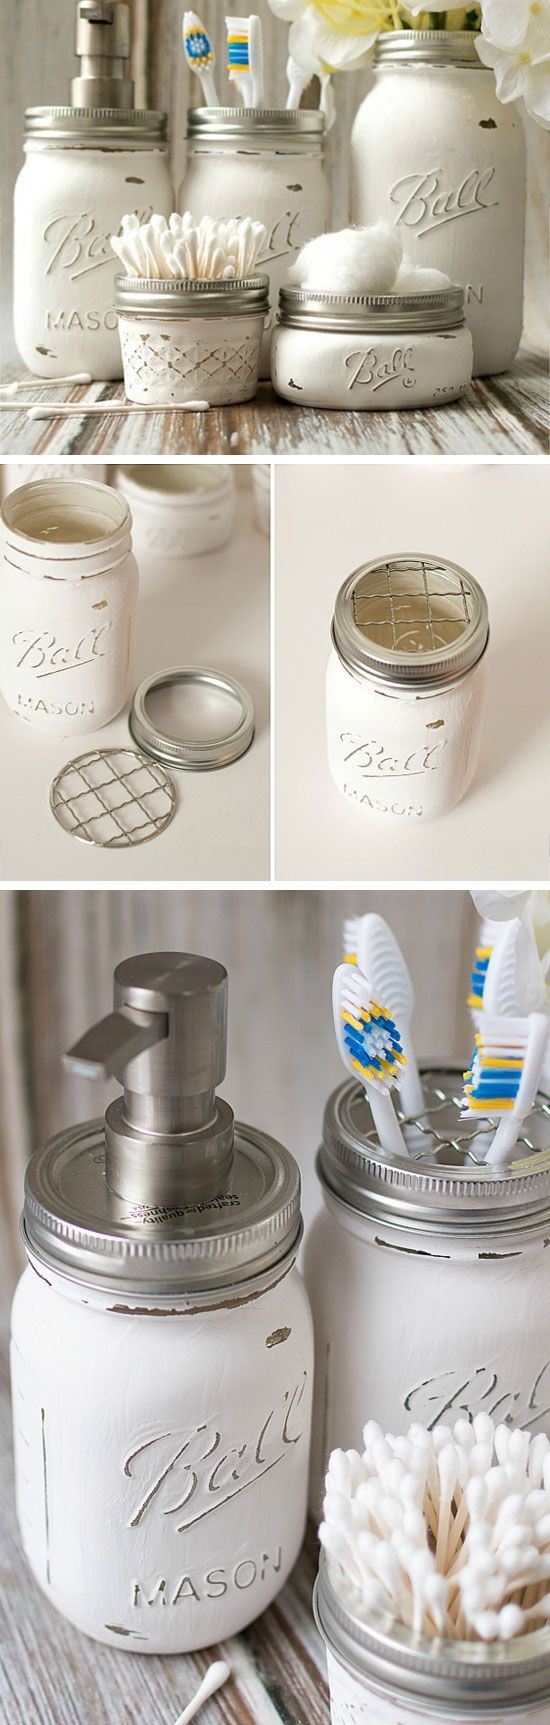 Best ideas about Mason Jar Bathroom Set DIY
. Save or Pin 20 DIY Bathroom Storage Ideas for Small Spaces Now.